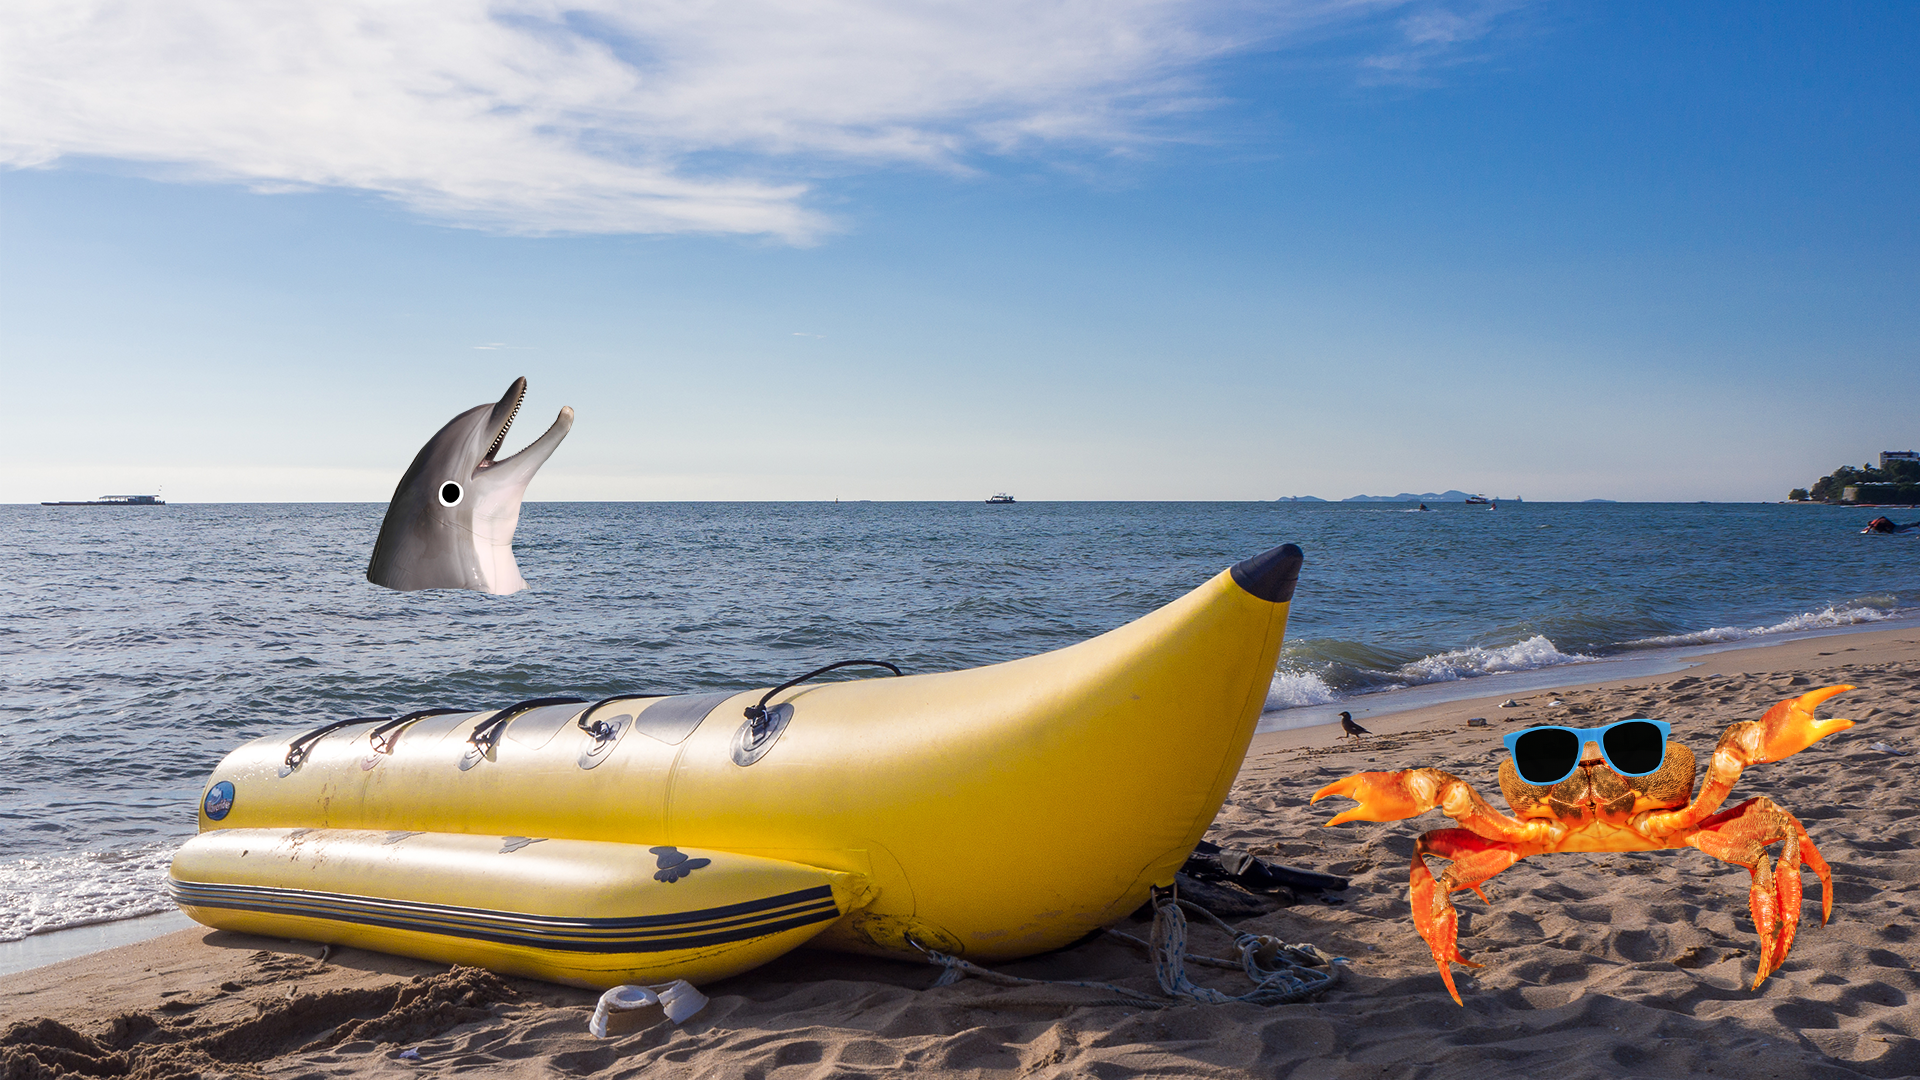 An inflatable boat on sandy beach